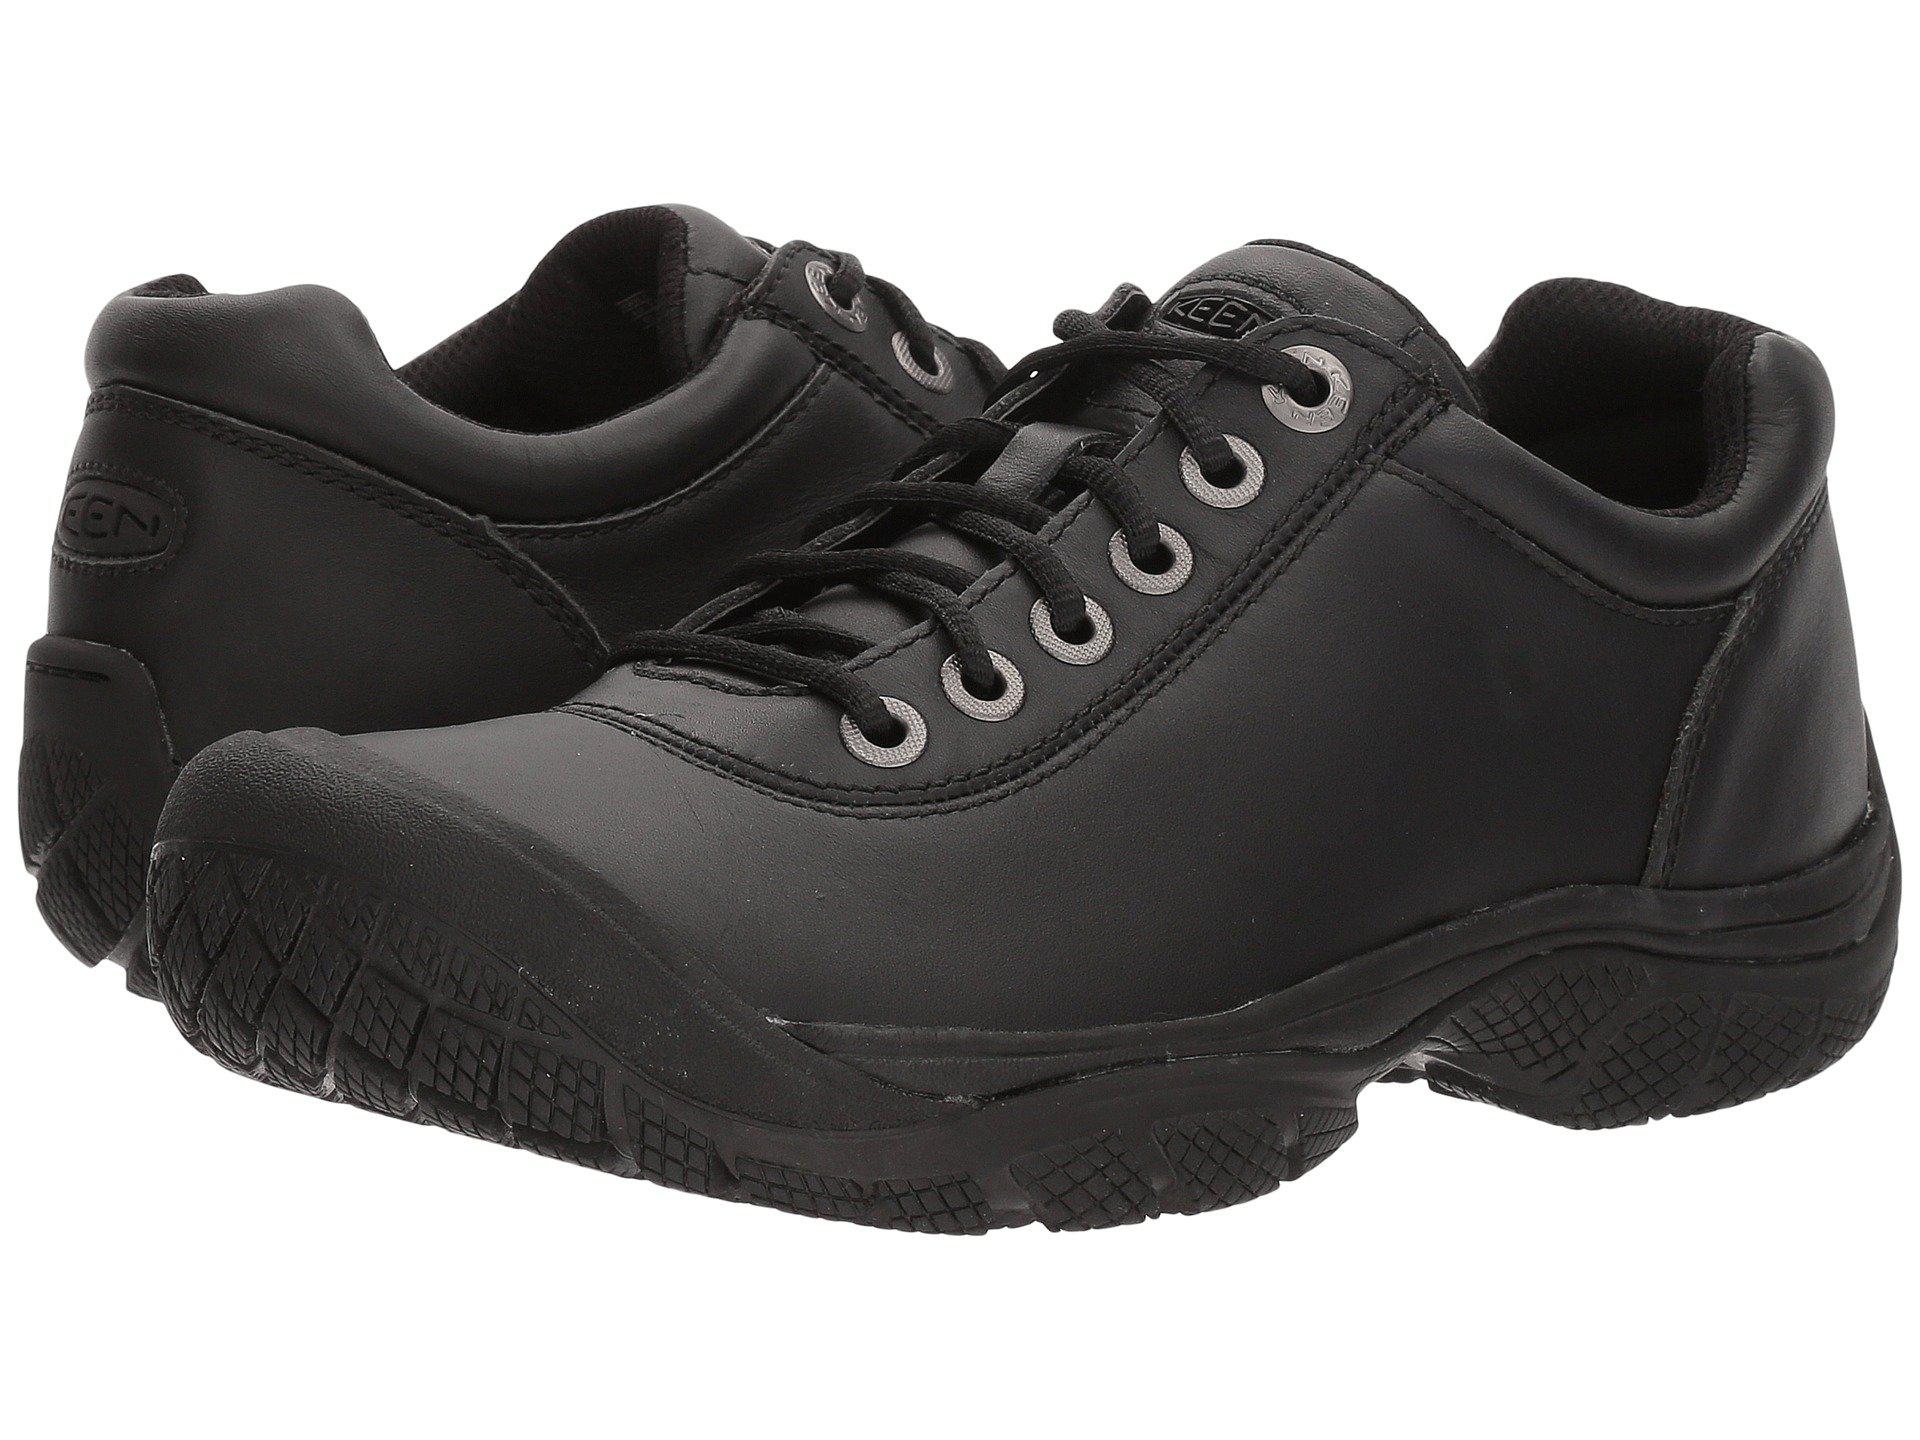 Lyst - Keen Utility Ptc Dress Oxford (black) Men's Industrial Shoes in ...